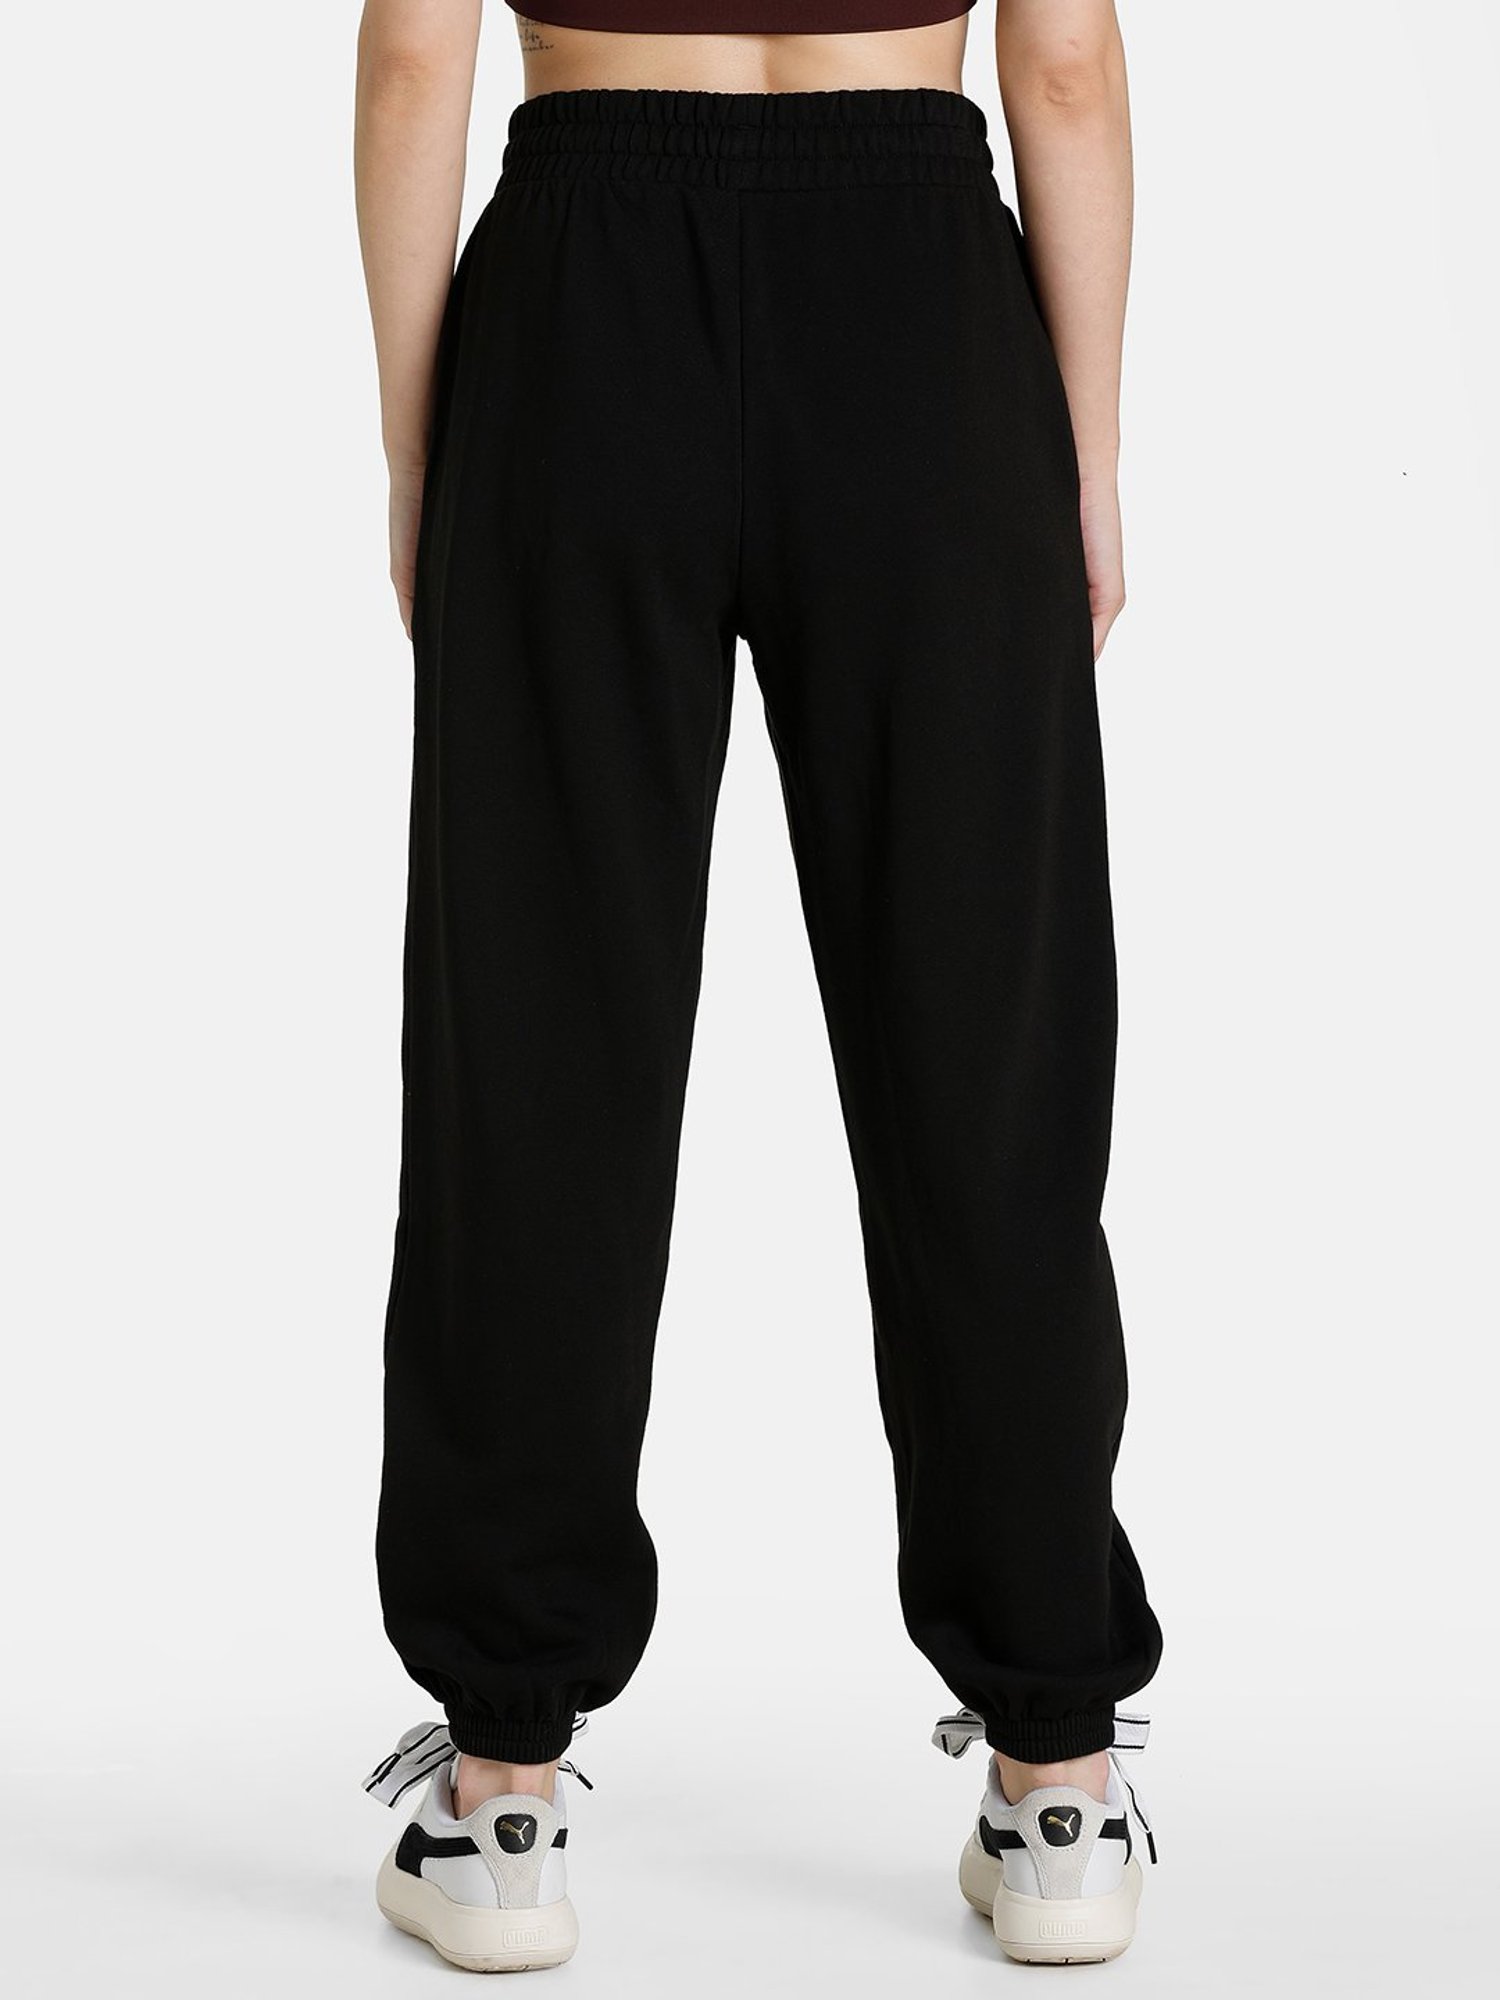 Buy Kazo Black Loose Fit Sweat Pants for Women's Online @ Tata CLiQ